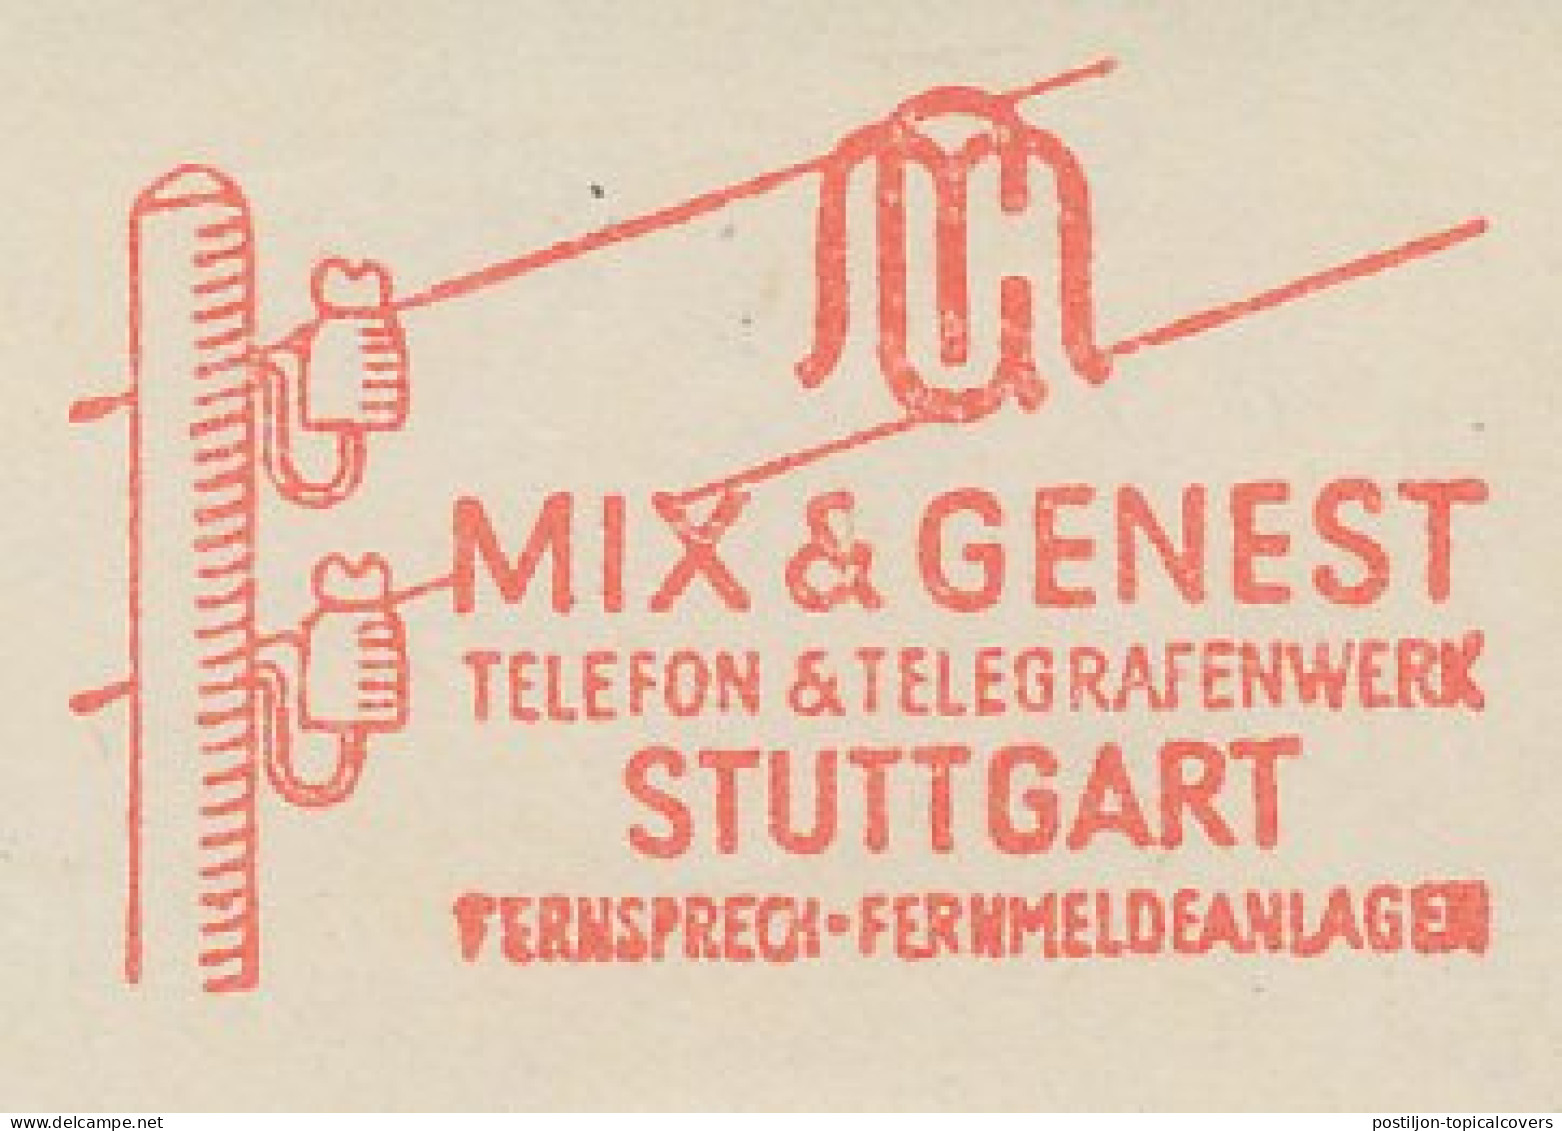 Meter Cut Germany 1952 Telephone Cable - Mix & Genest - Telekom